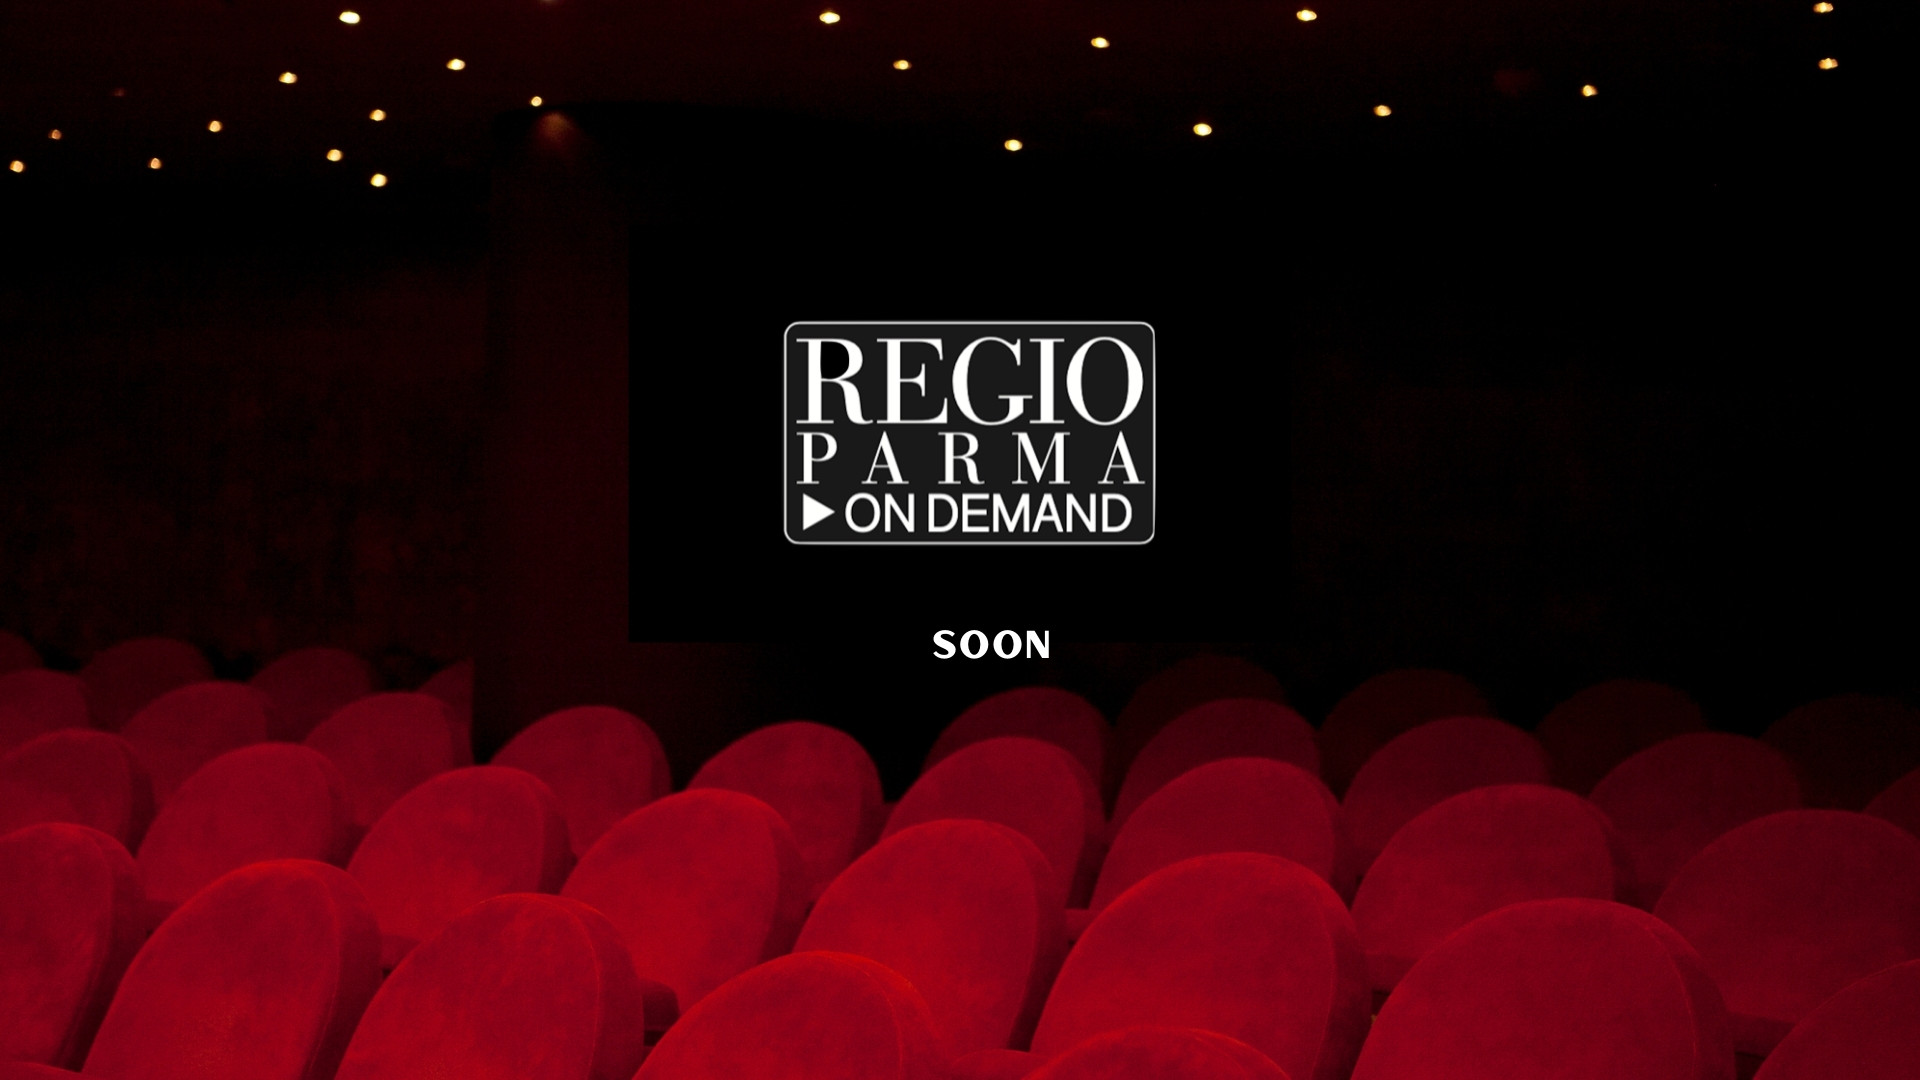 teatroregio, marketing, teatro, spettacolo, on demand, netflix, prime video